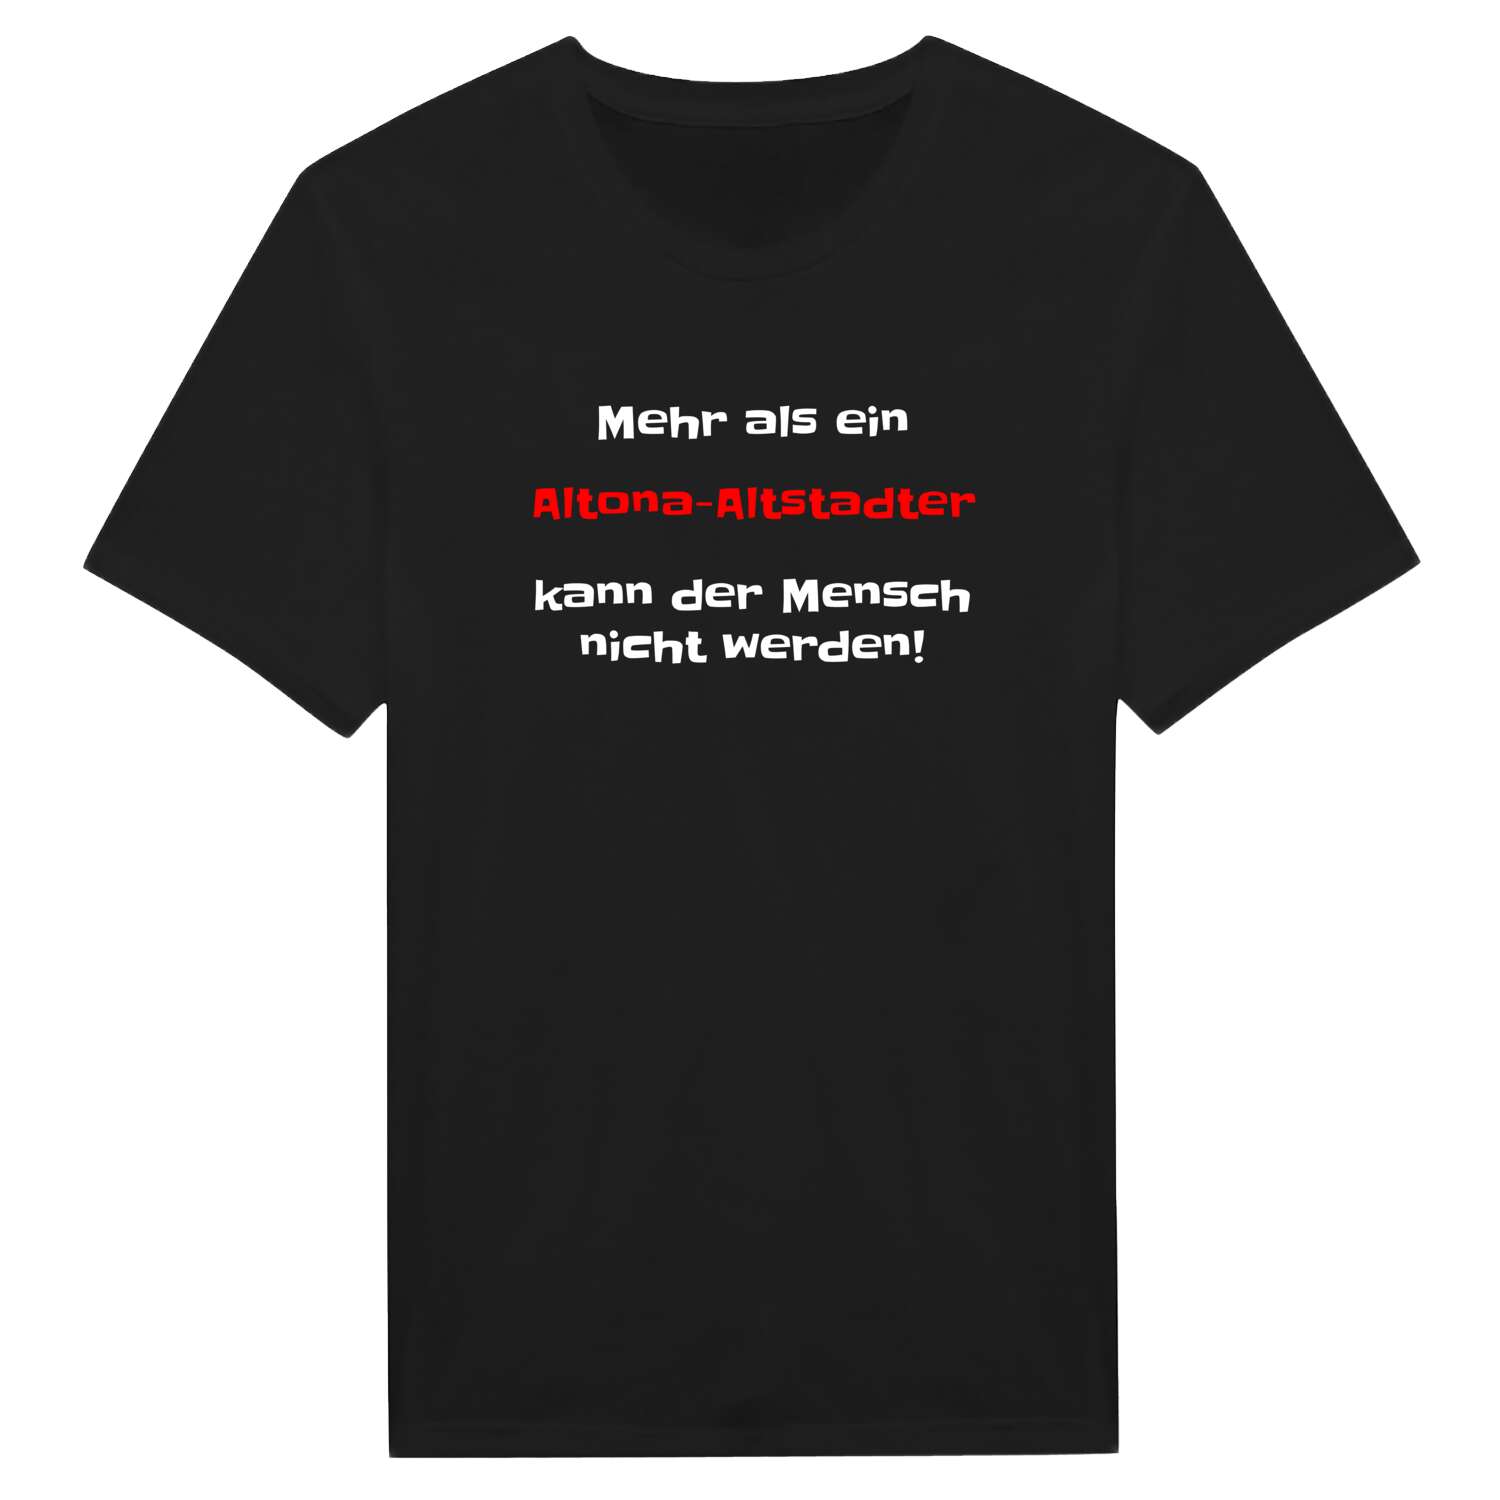 Altona-Altstadt T-Shirt »Mehr als ein«